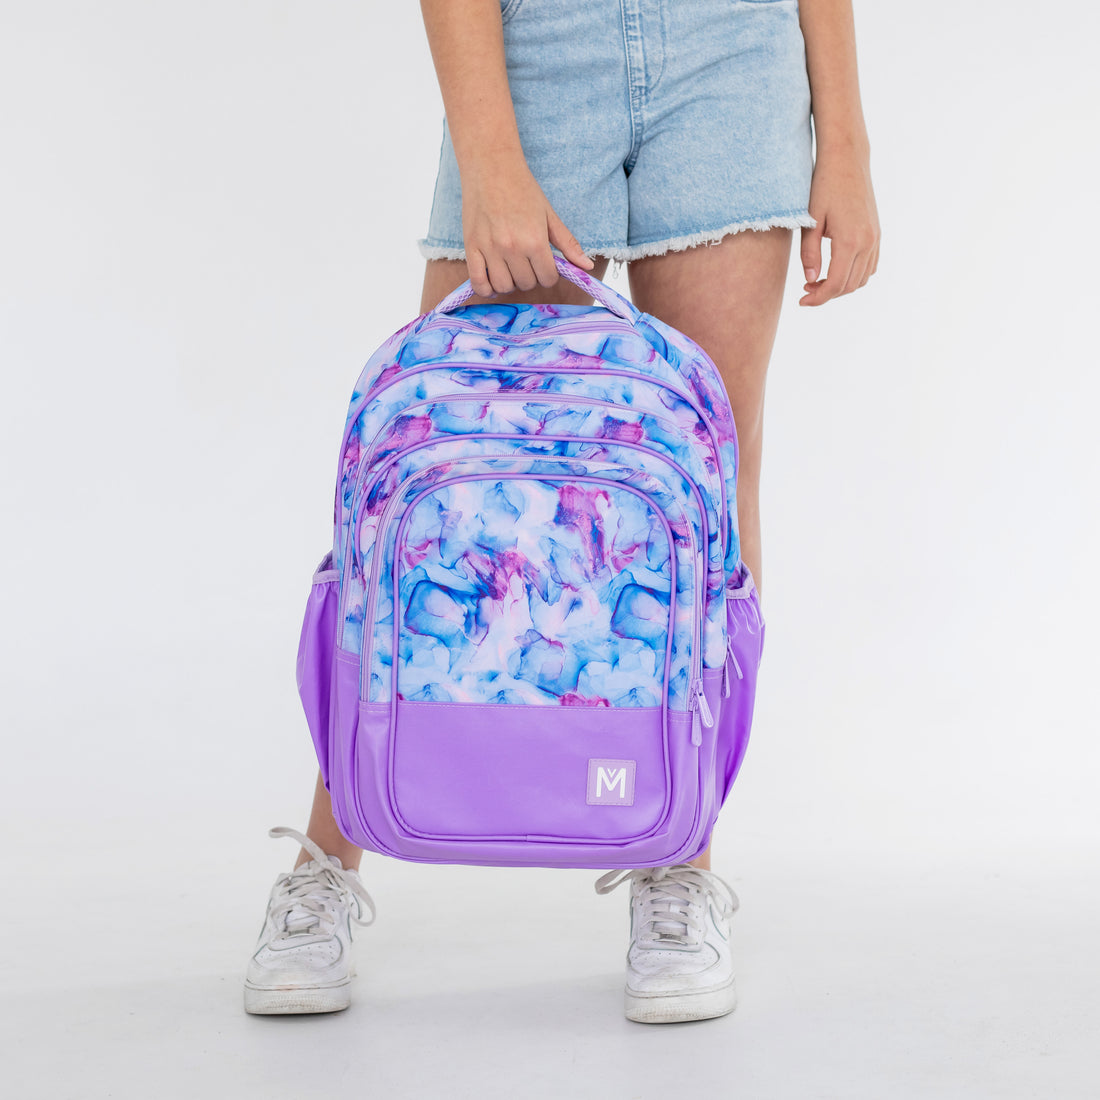 Backpack MONTII Aurora con cierre